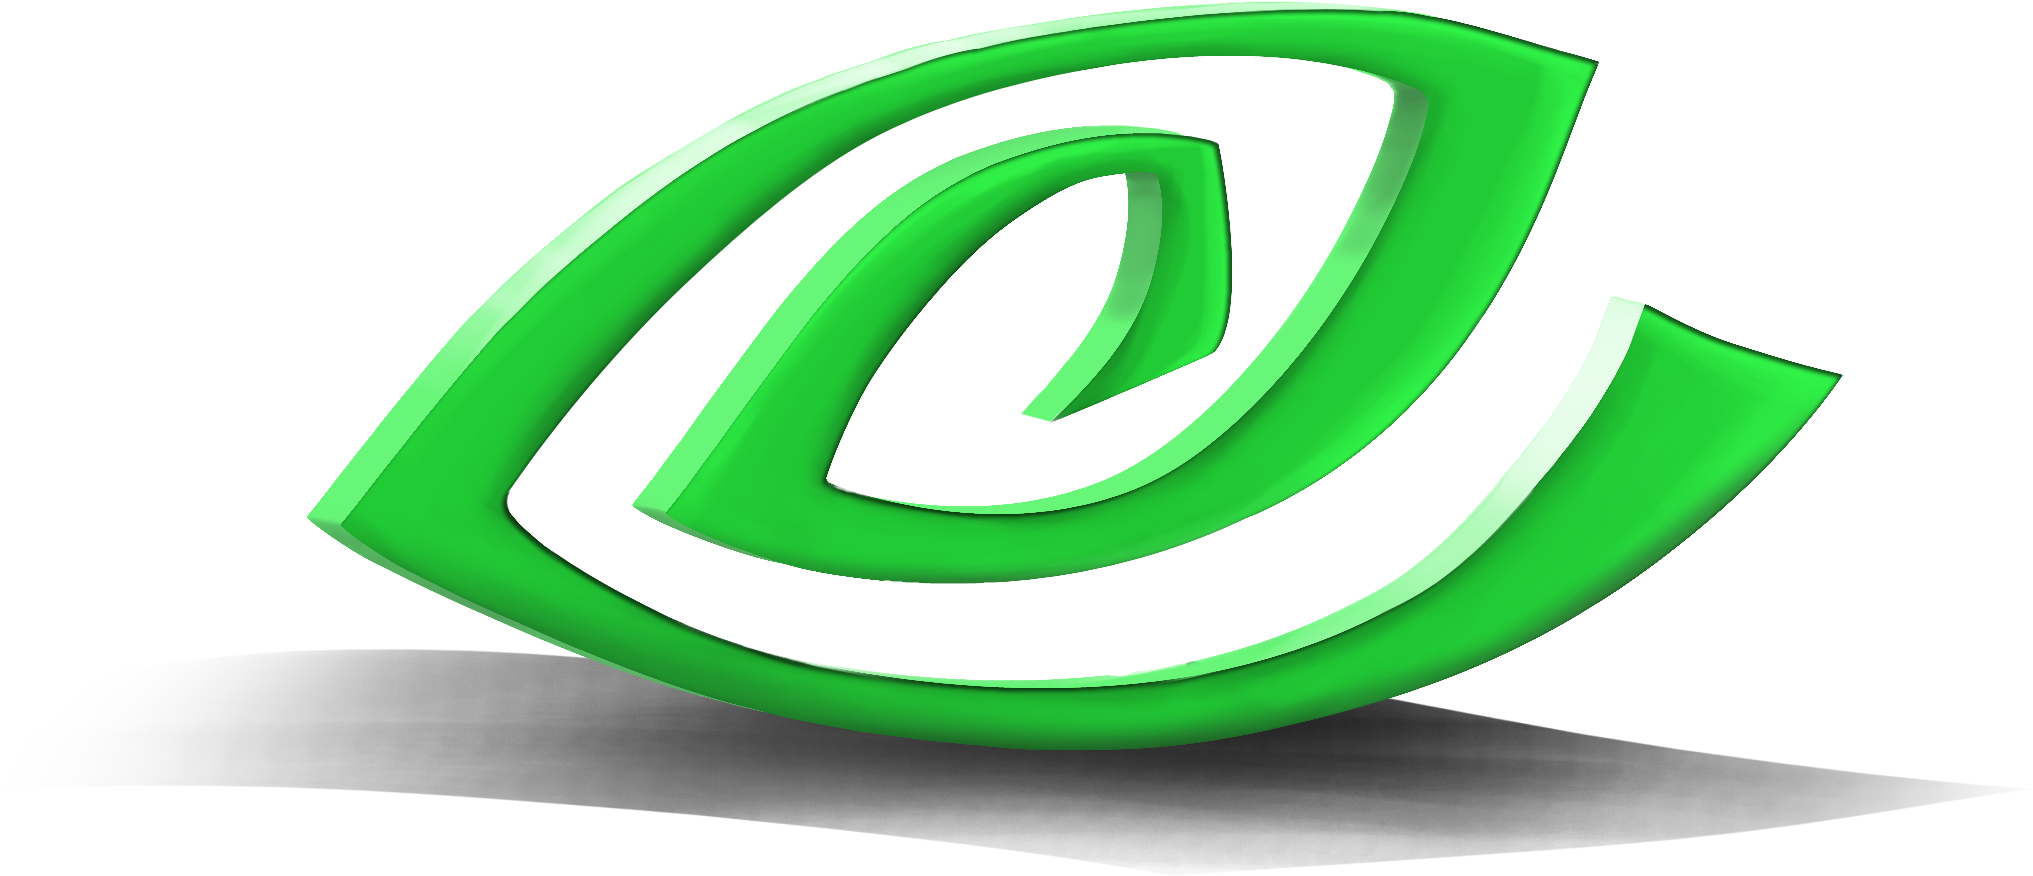 Green White Eye Logo - Green (3000x1500)